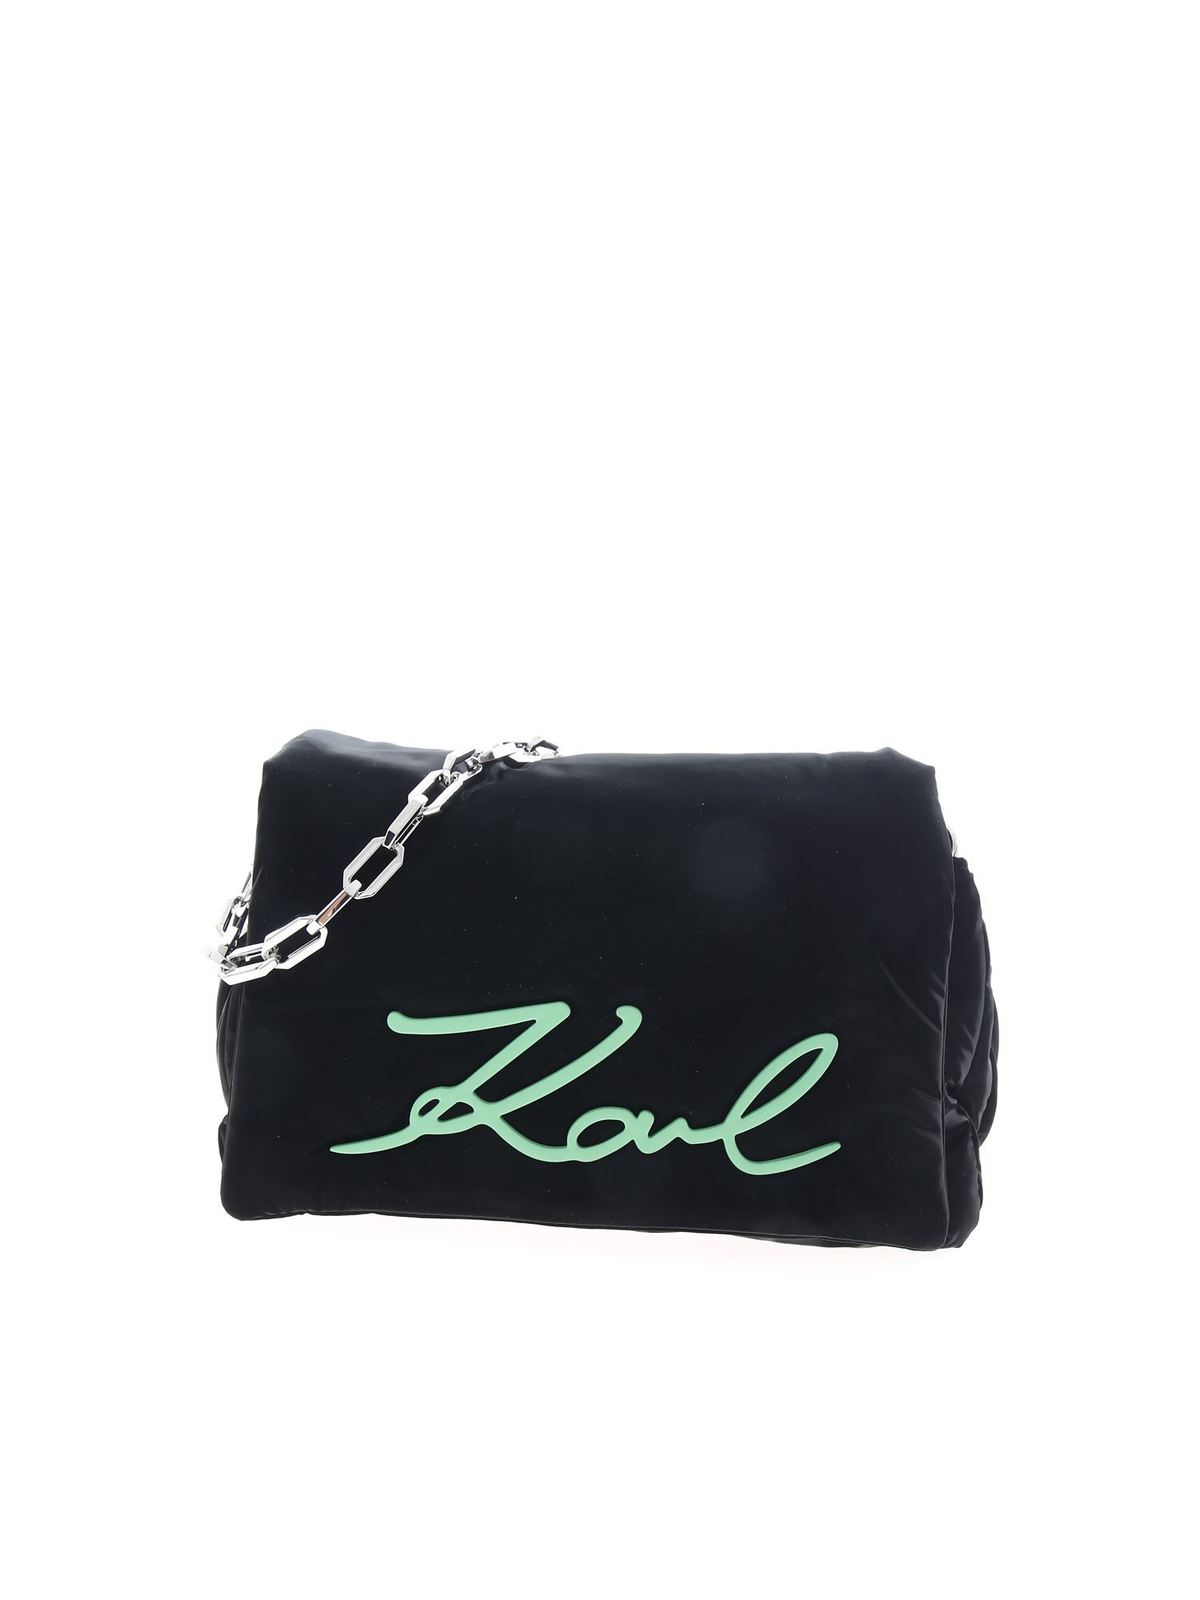 NWT Karl Lagerfeld Maybelle Tote Bag | eBay